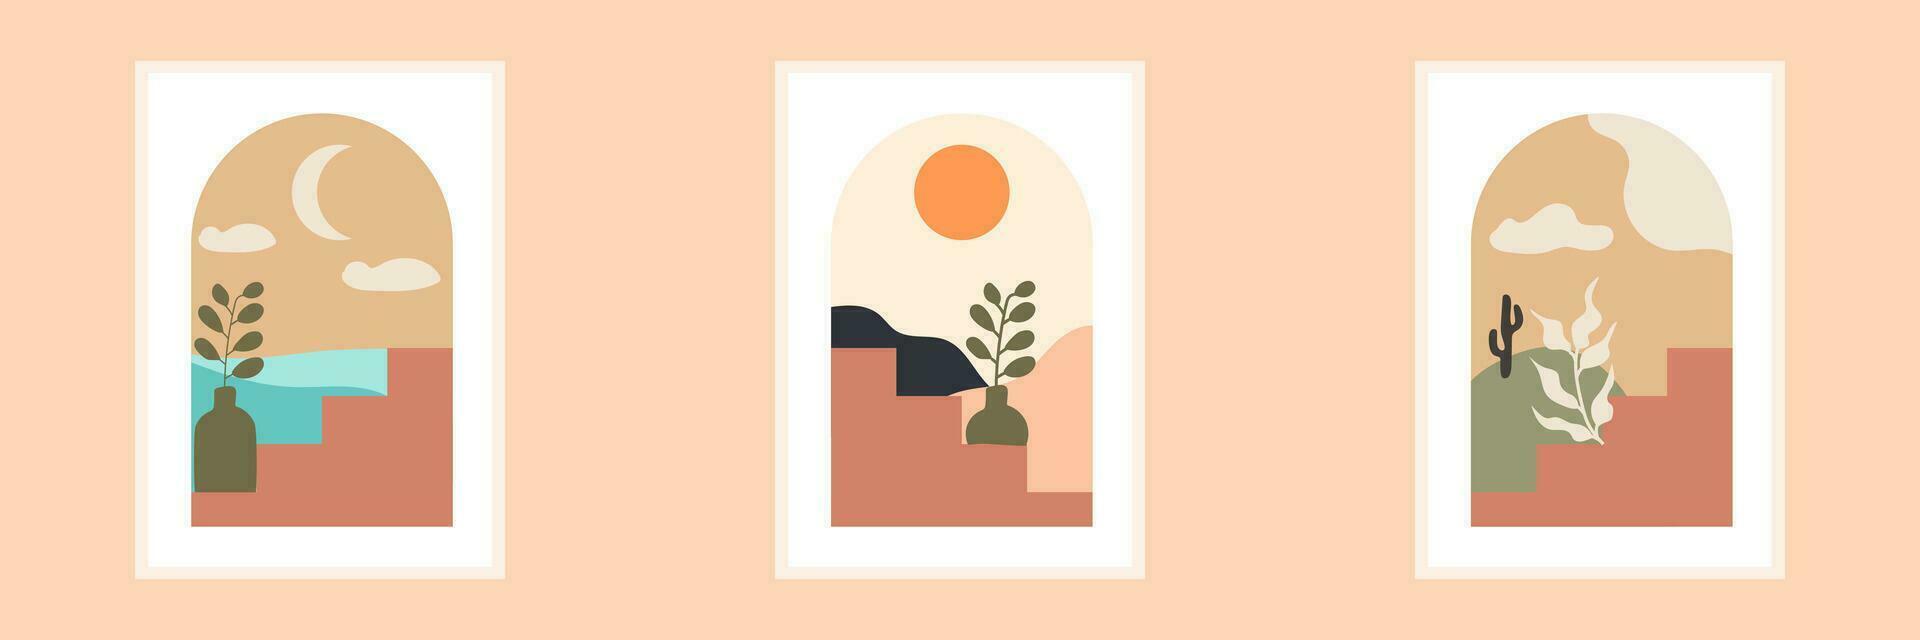 Abstract contemporary aesthetic background with desert landscape,vases,Sun.  Earth tones, burnt orange, terracotta colors.  Boho wall decor.  Mid century modern minimalist art print. vector